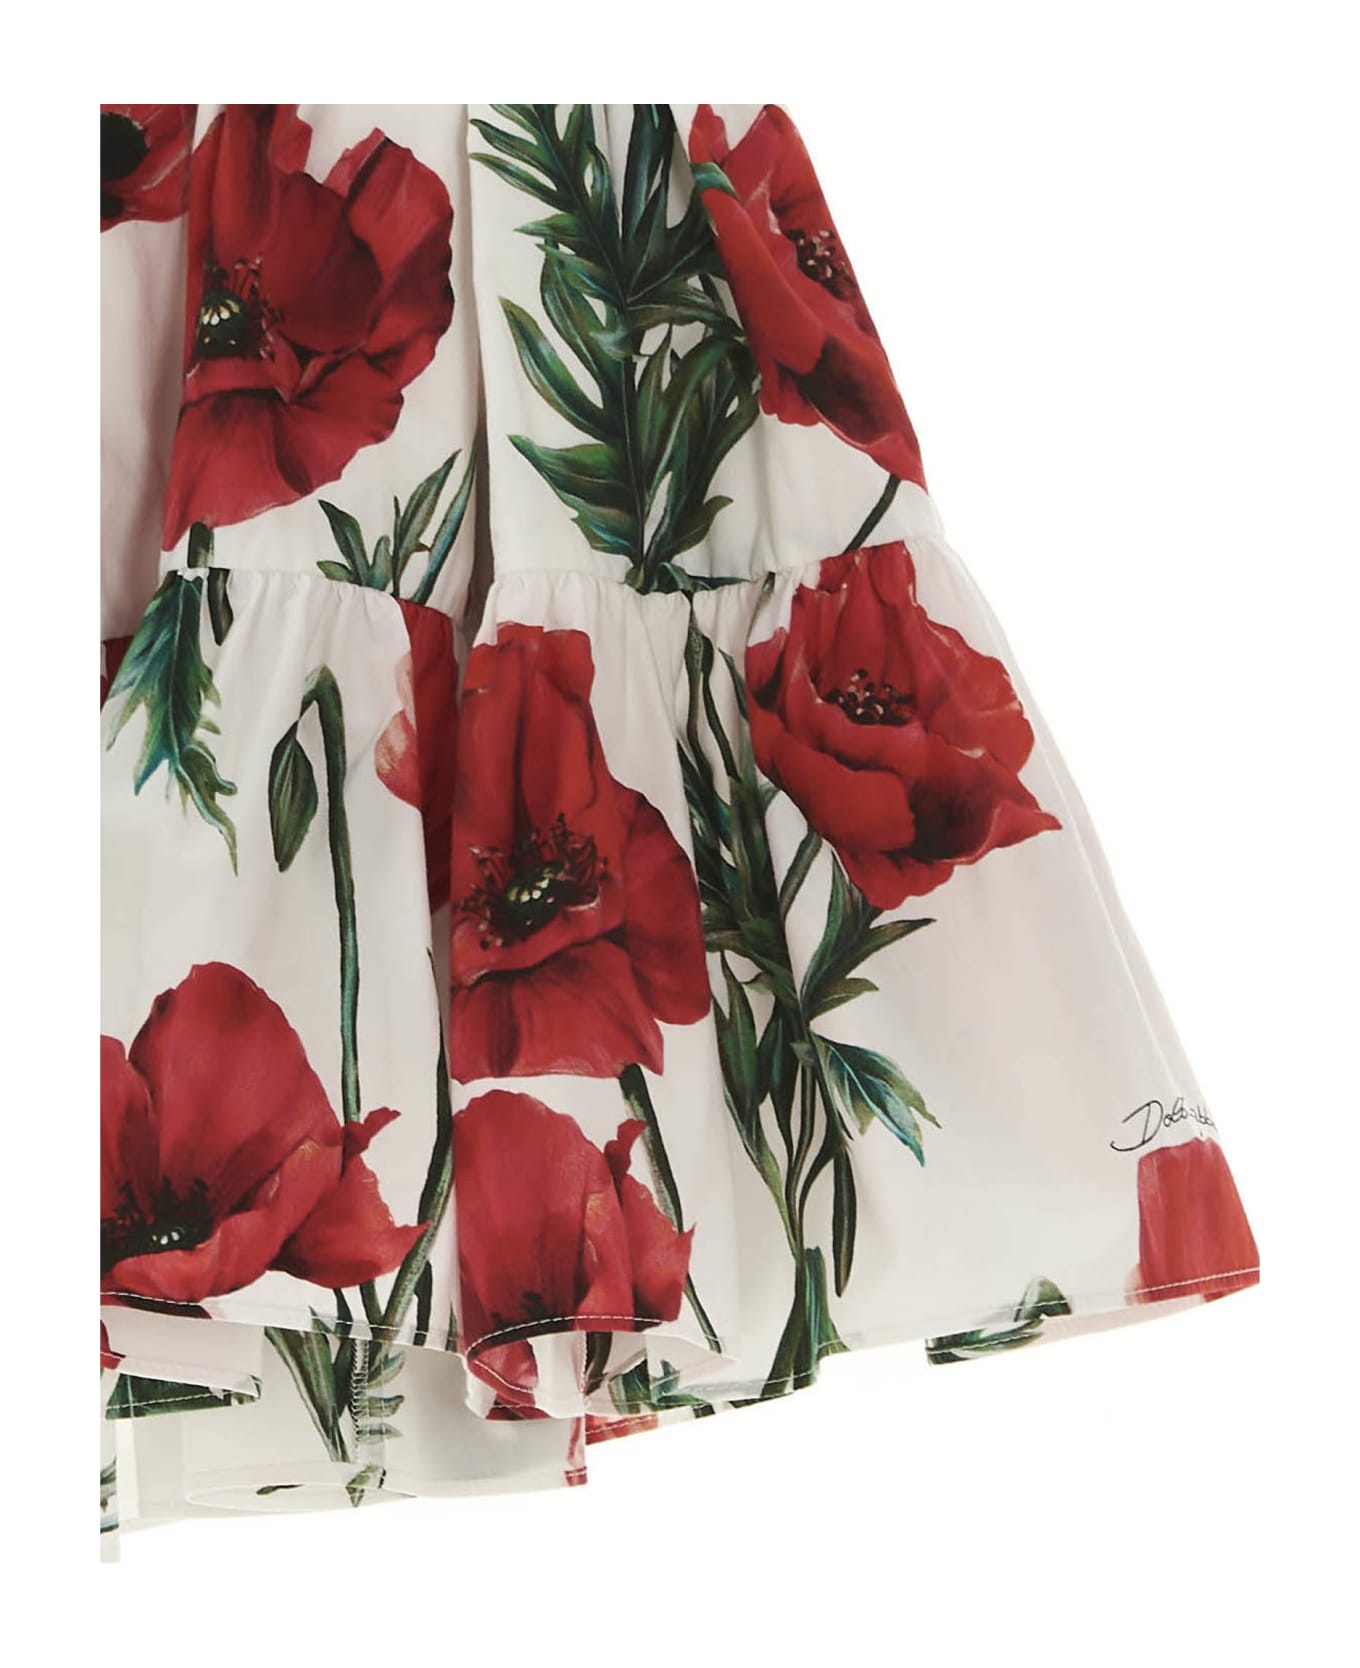 Dolce & Gabbana 'happy Garden' Skirt - Multicolor